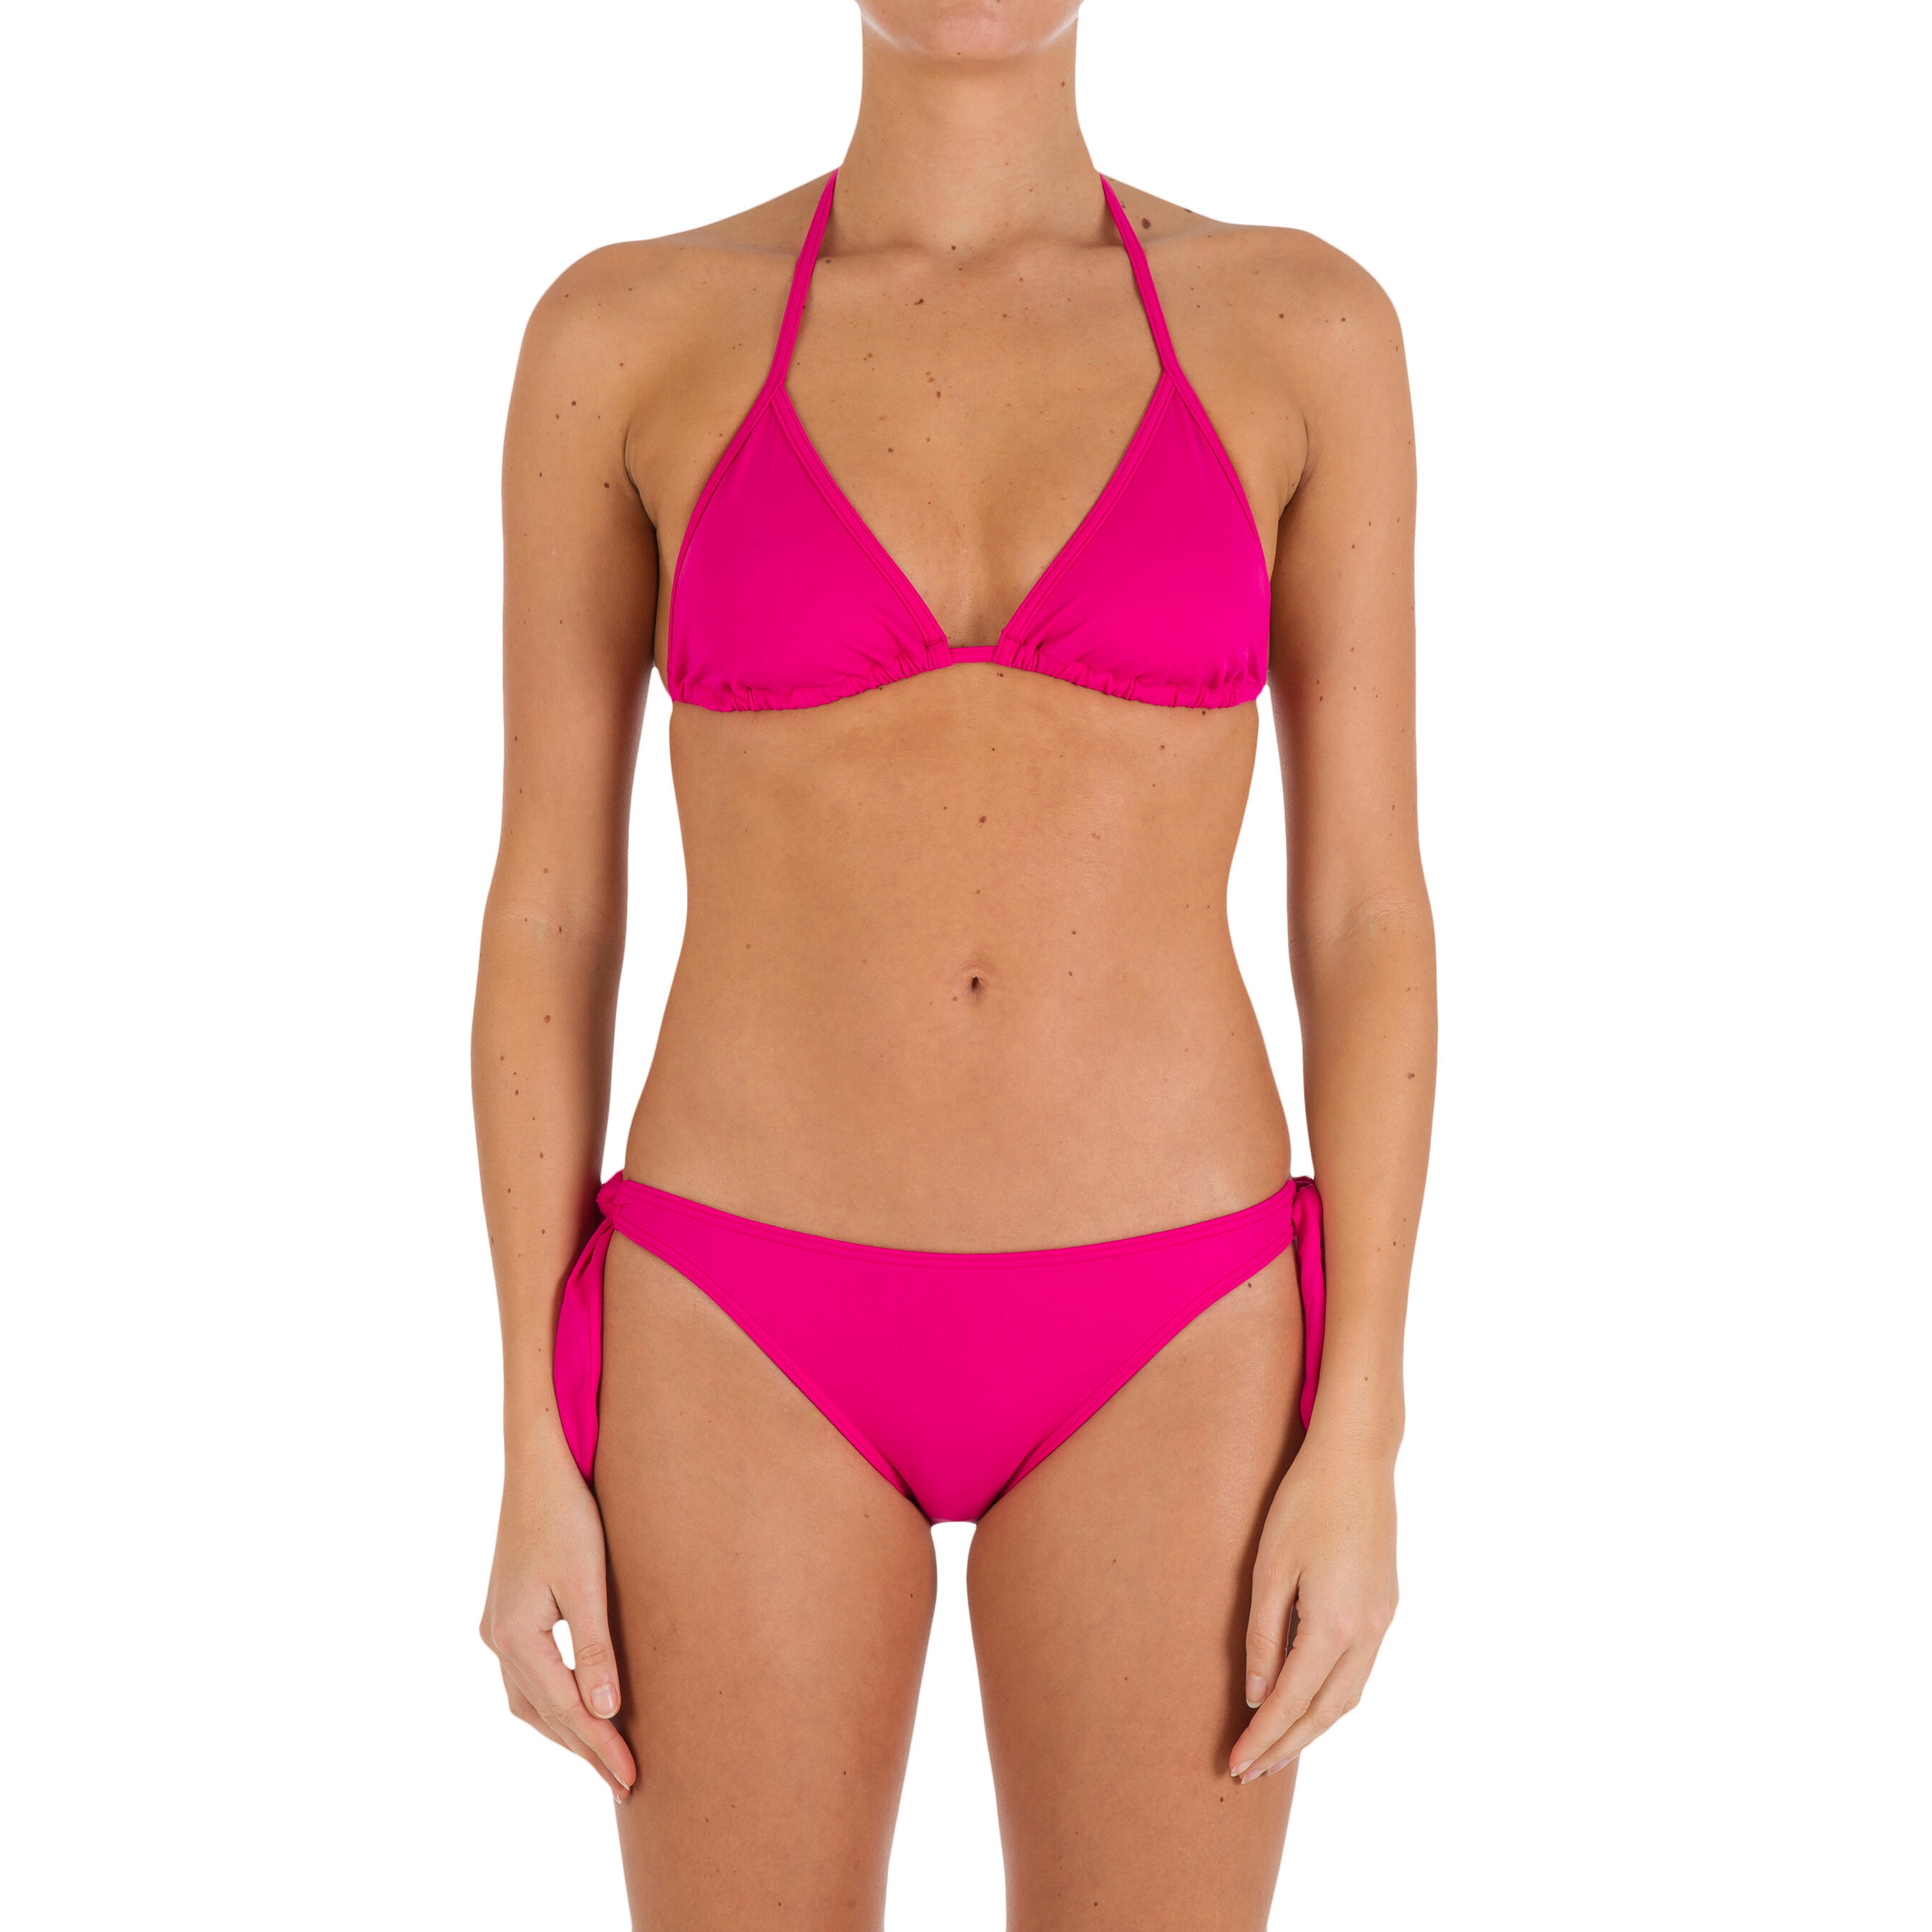 MAE women's triangle swimsuit - Plain pink 7/9